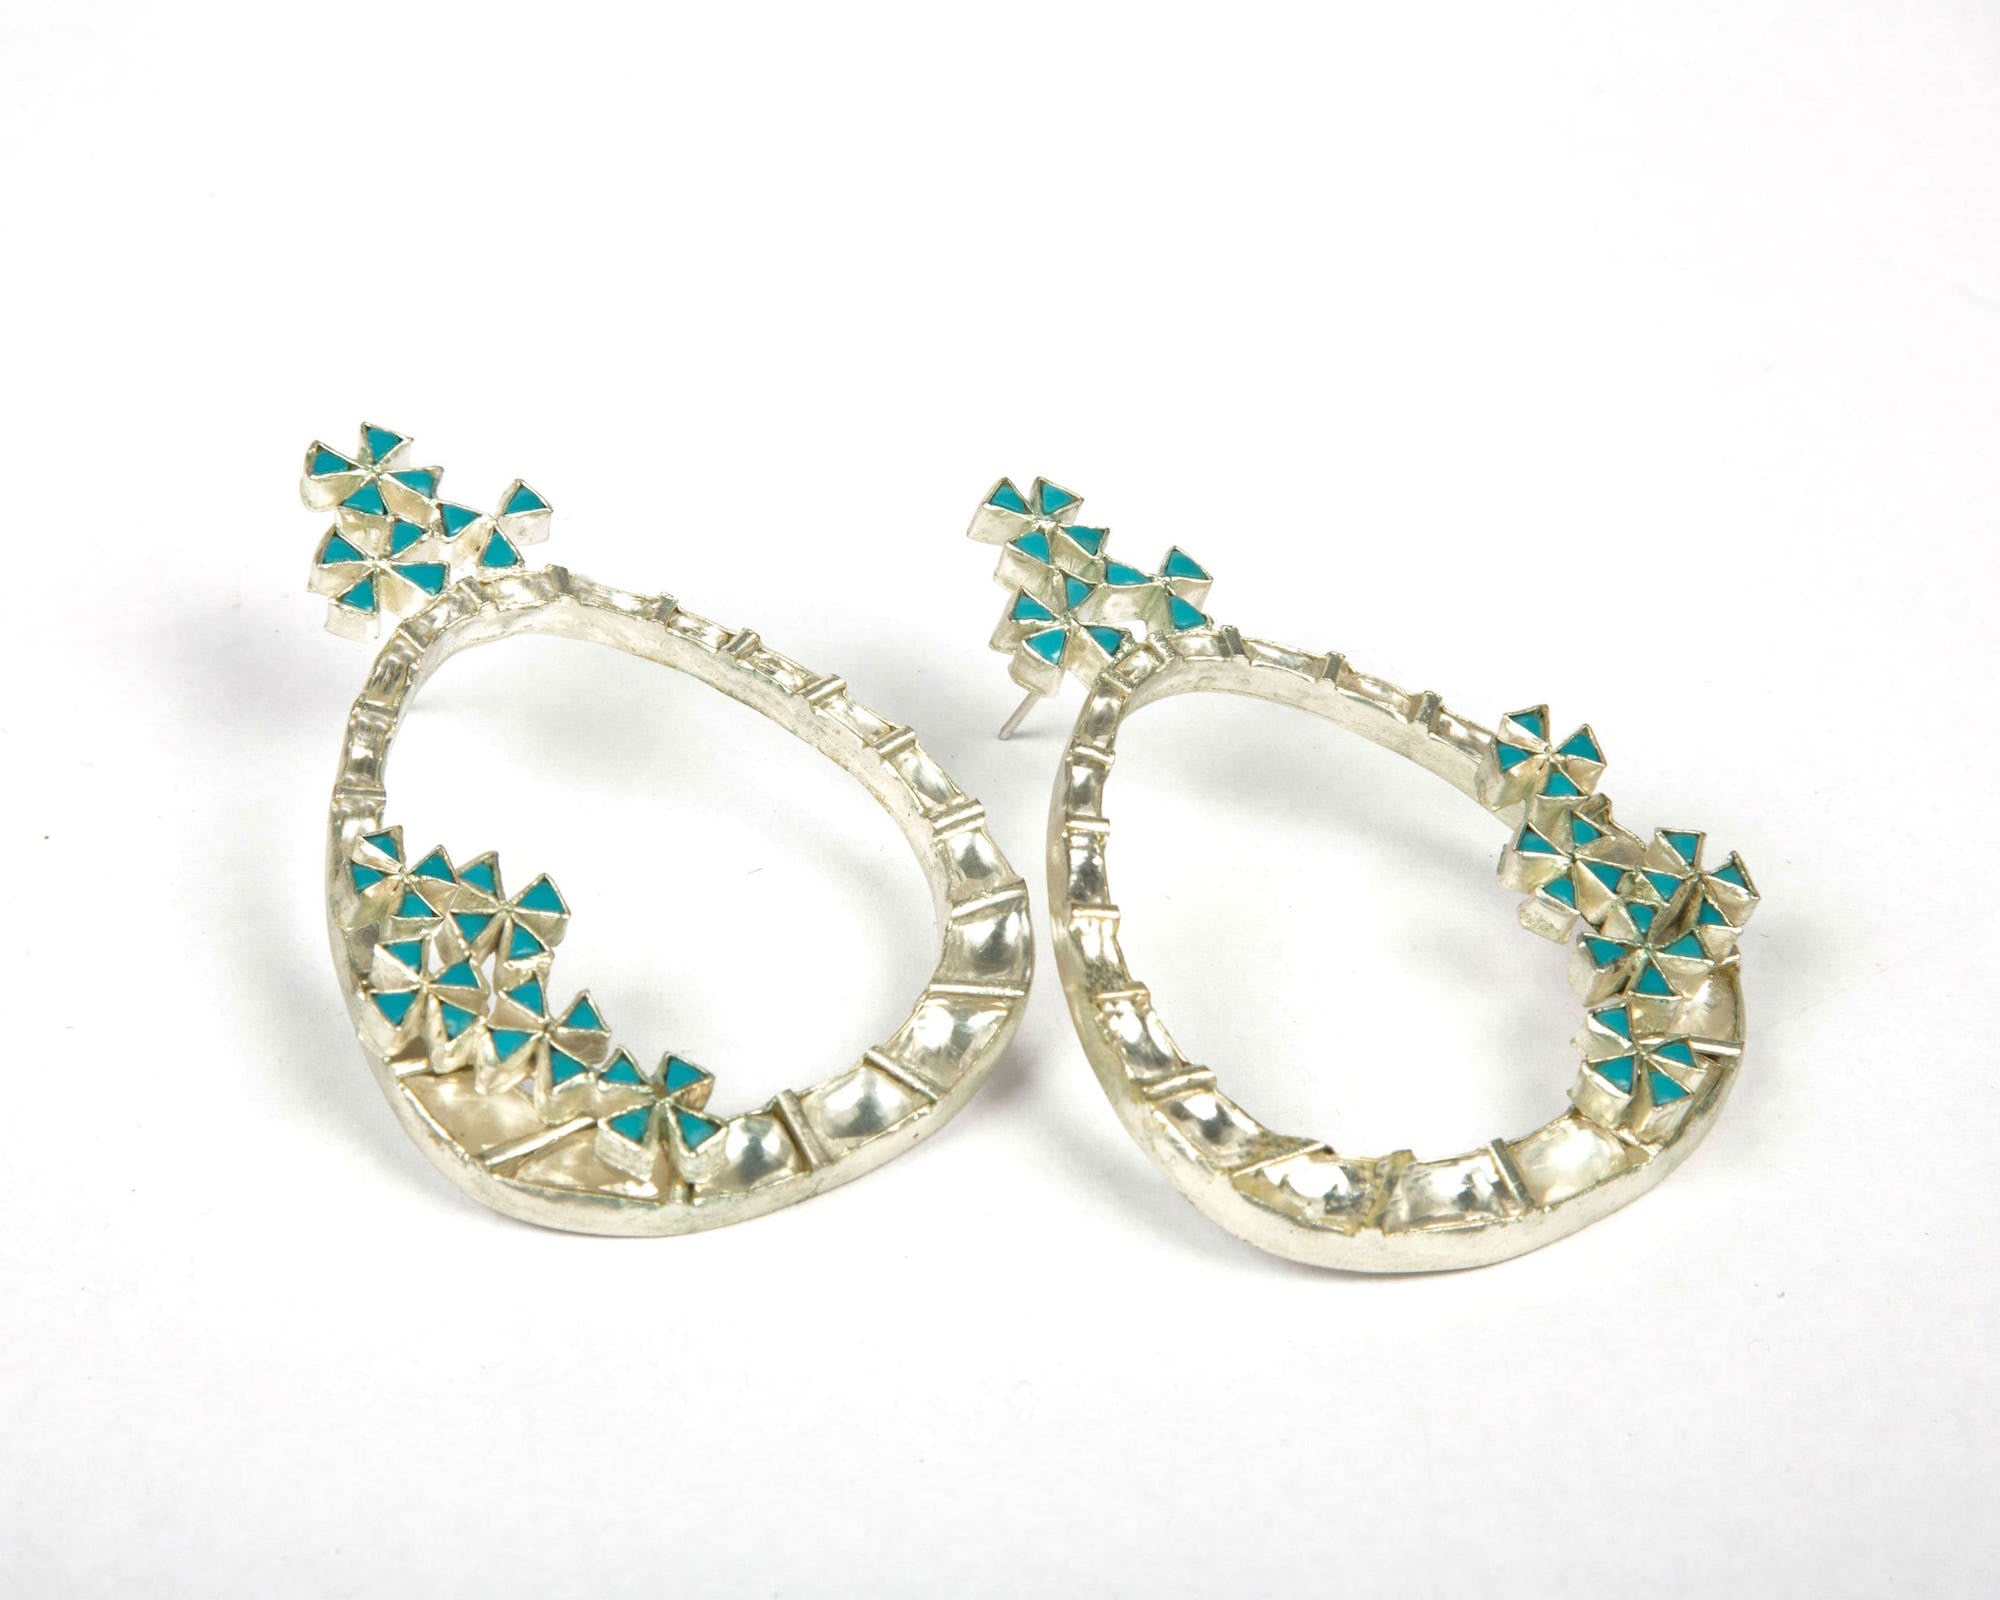 Kundan hoop earrings with flowers made of turquoise stones